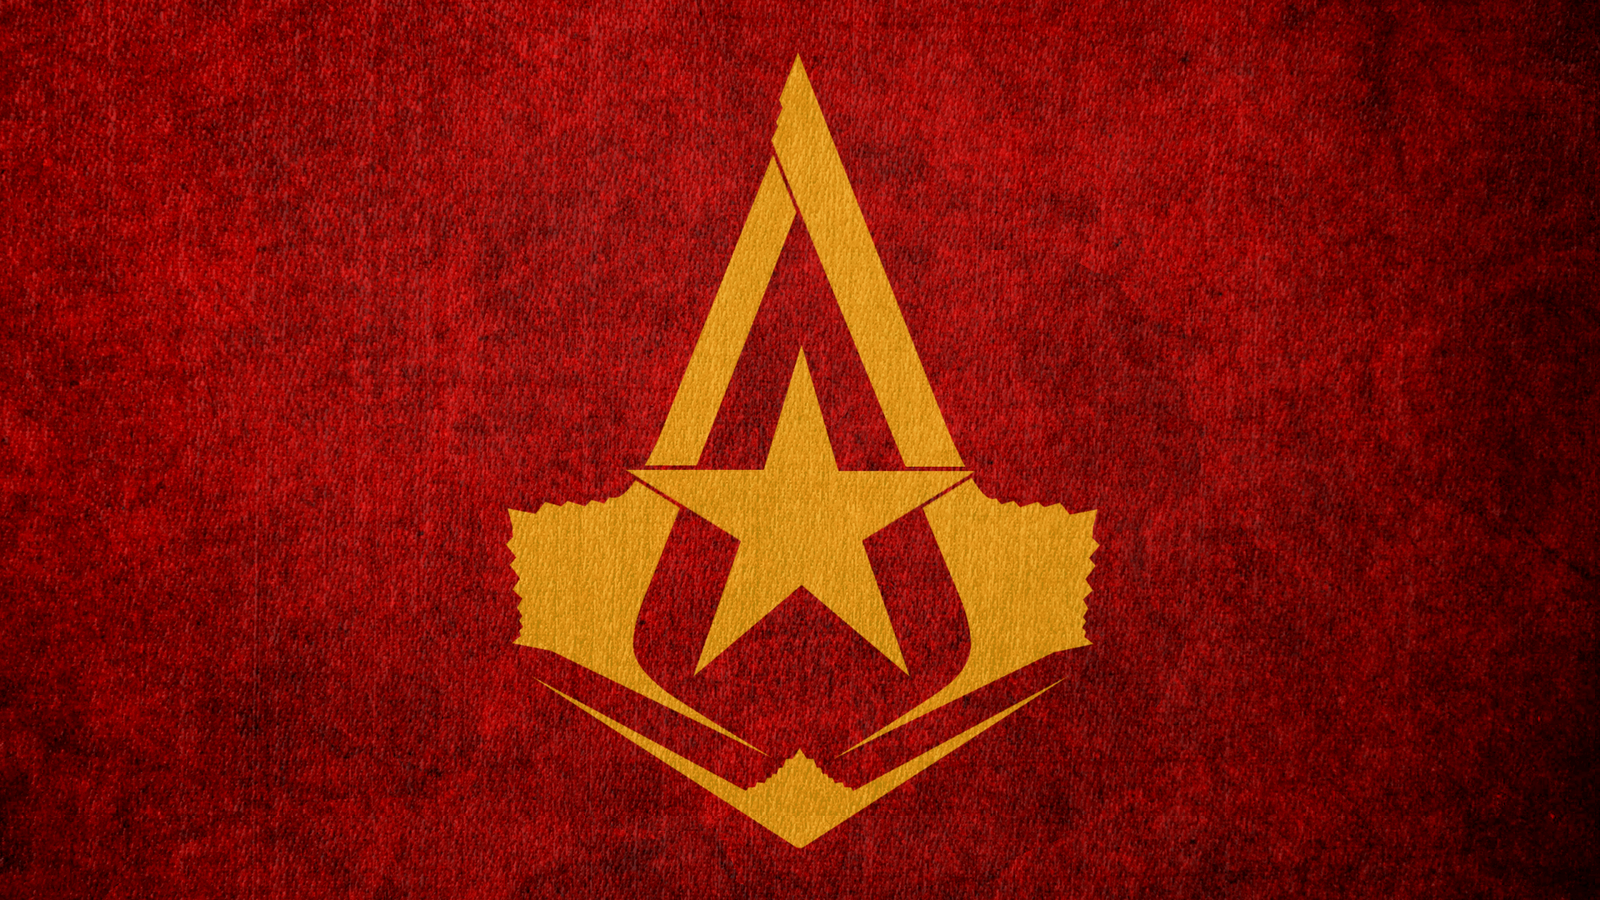 Assassin's Creed IV: Black Flag - Wallpaper by okiir on DeviantArt